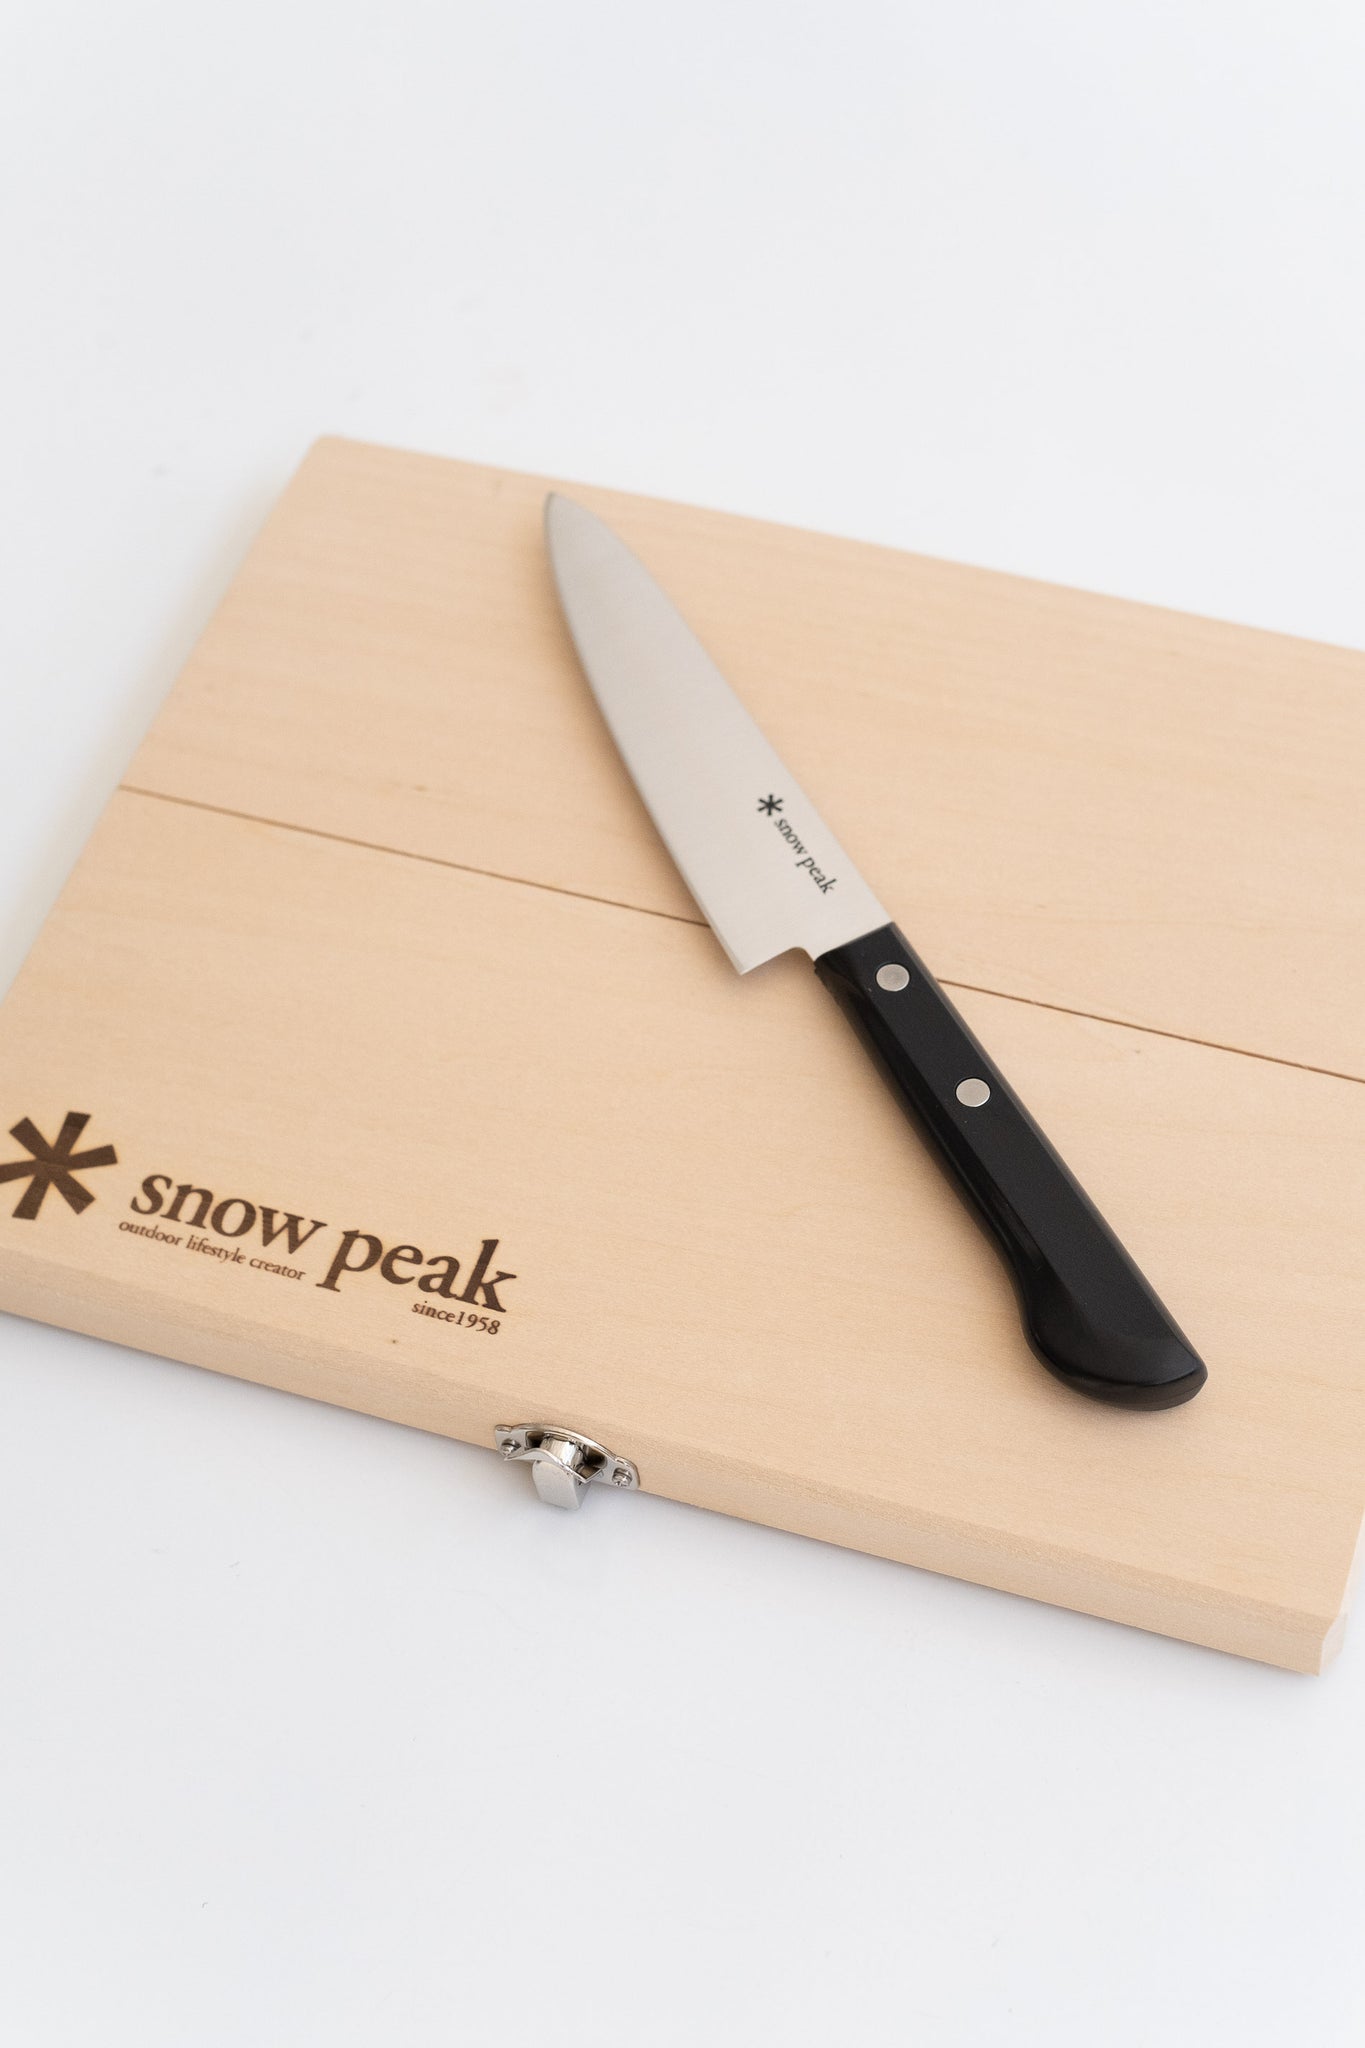 Snow Peak - Chopping - Board Set